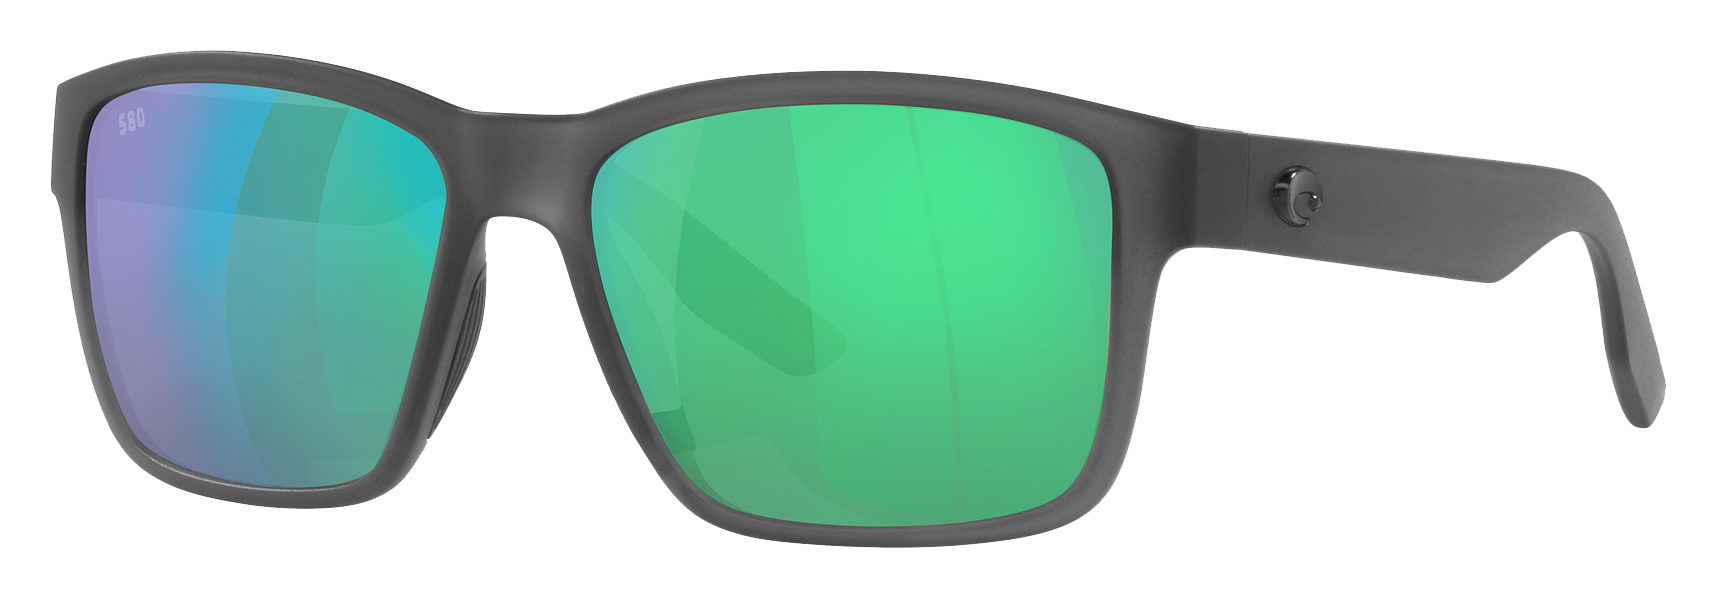 Costa Del Mar Paunch 580G Glass Polarized Sunglasses - Matte Smoke Crystal/Green Mirror - Large